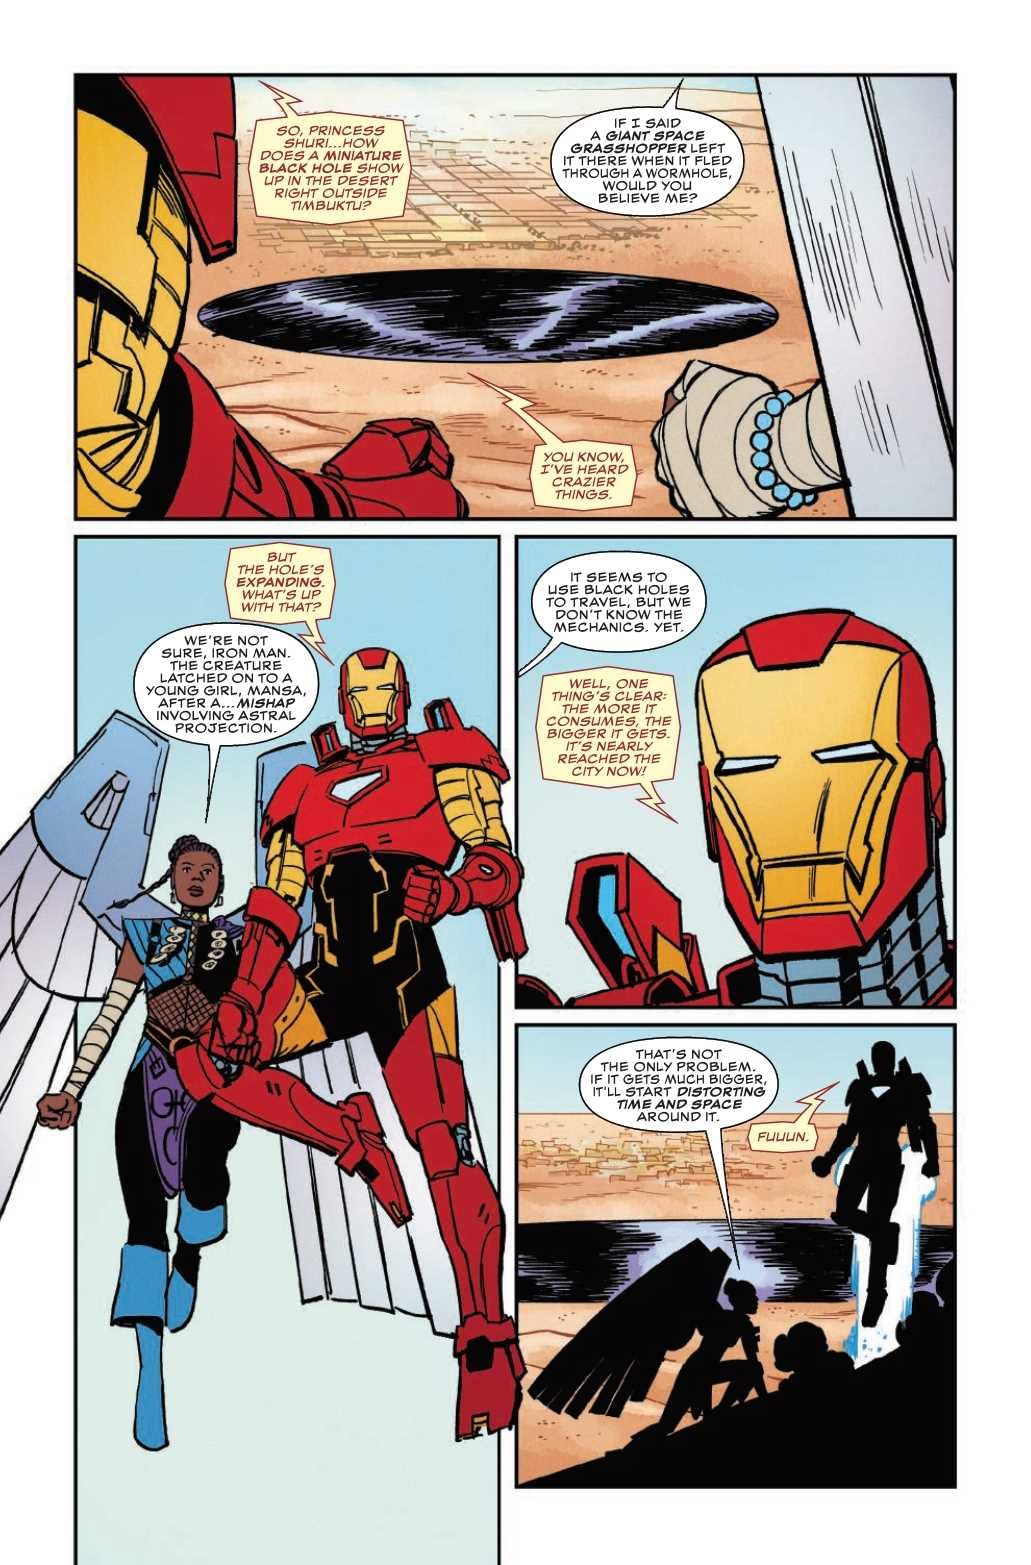 Terrible Ideas Follow Iron Man Everywhere in Next Week's Shuri #5 (Preview)